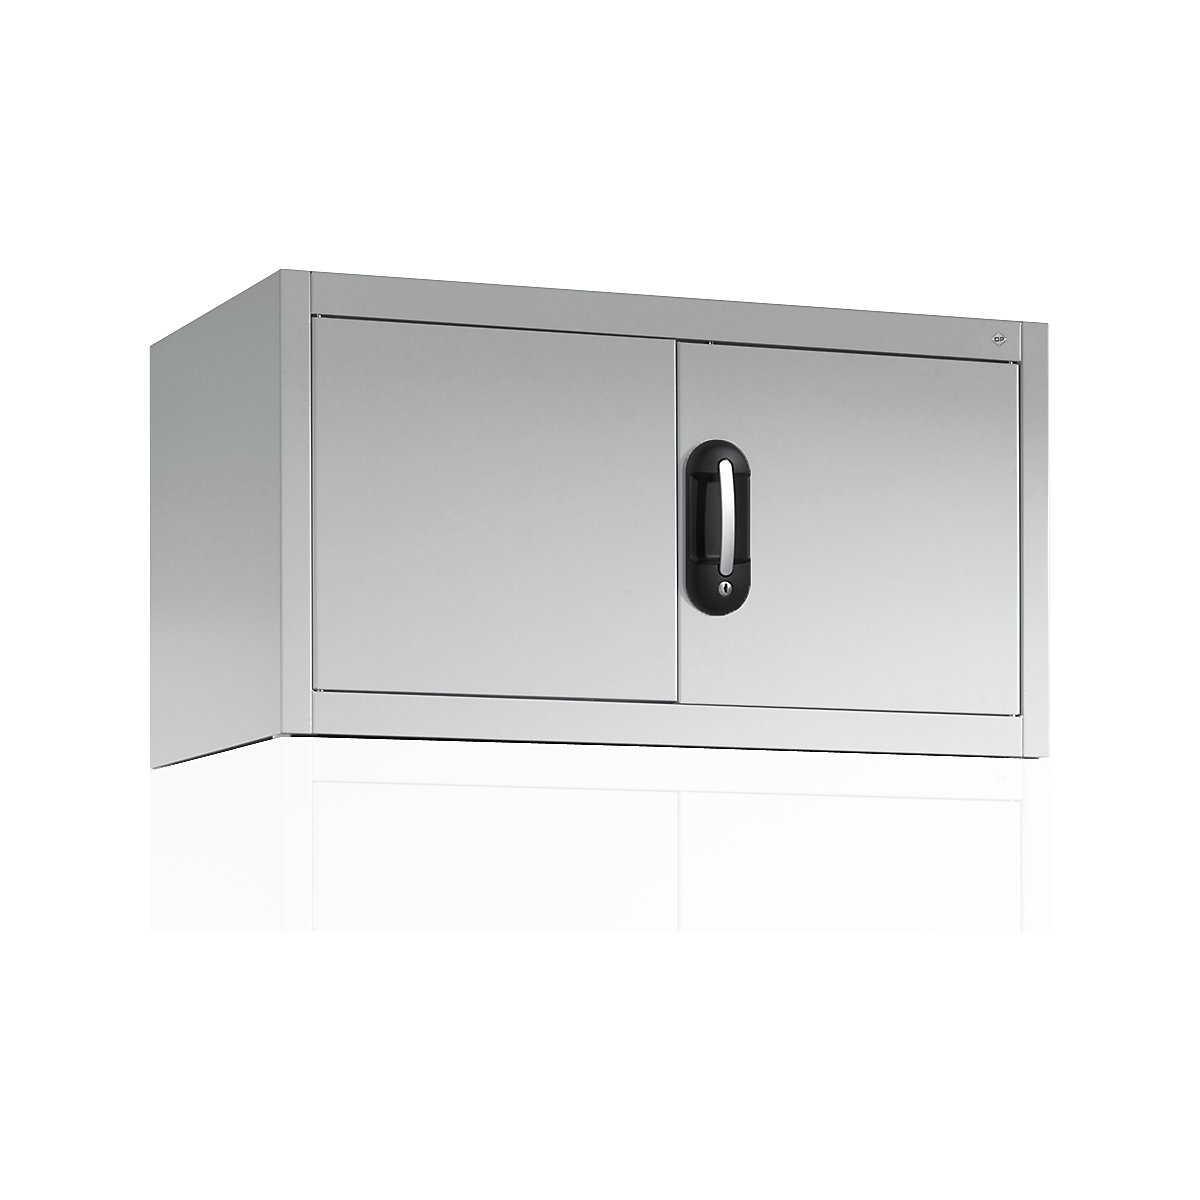 ACURADO add-on cupboard with hinged doors - C+P